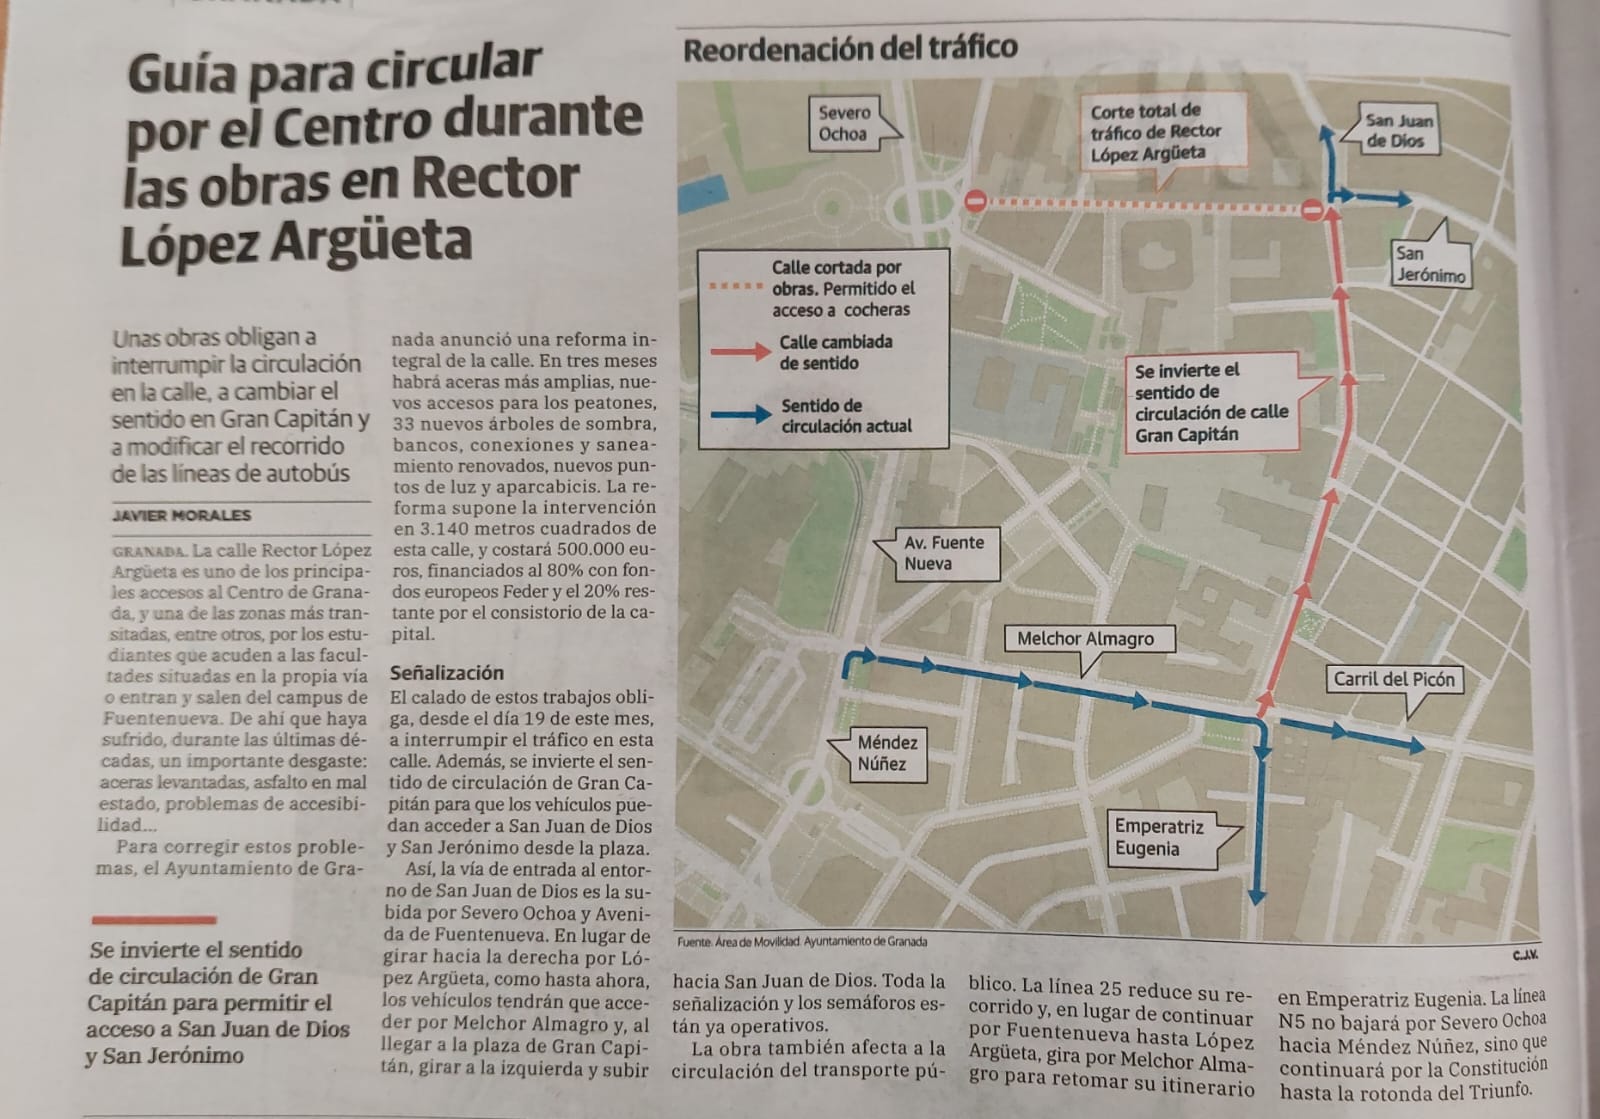 Guía para circular por el centro por obras en Rector López Argüeta